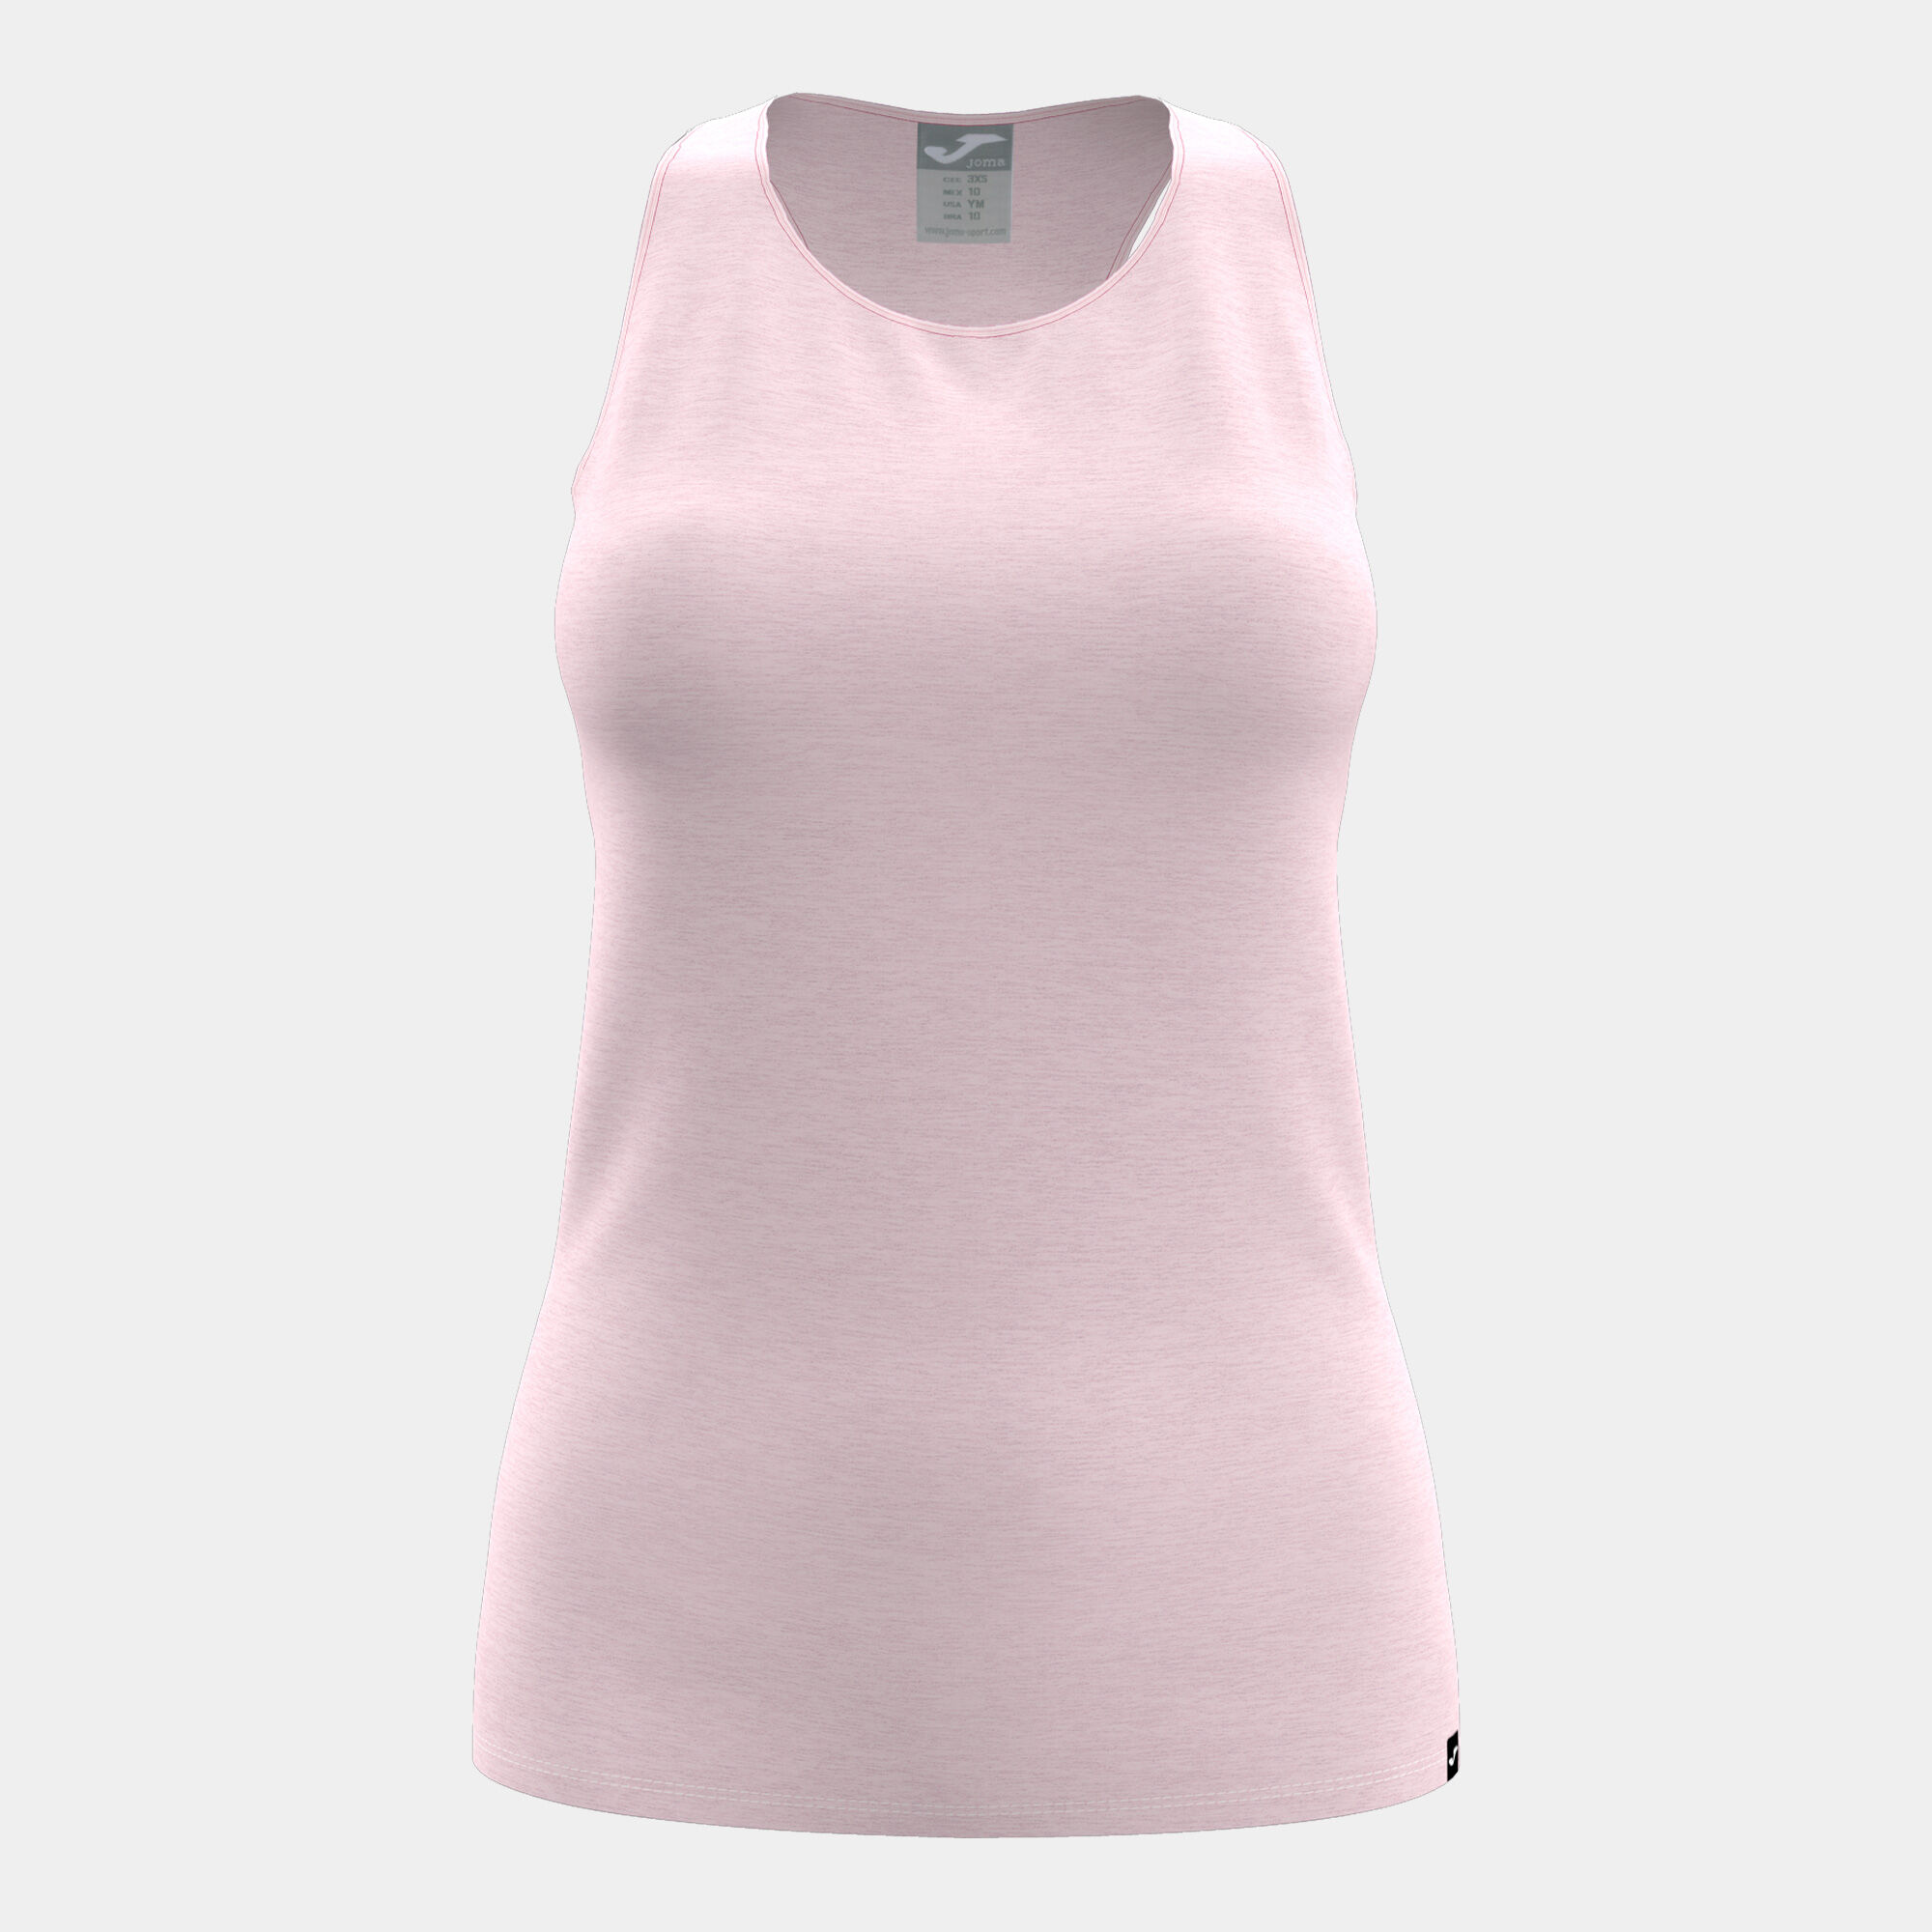 Camiseta tirantes mujer Oasis rosa